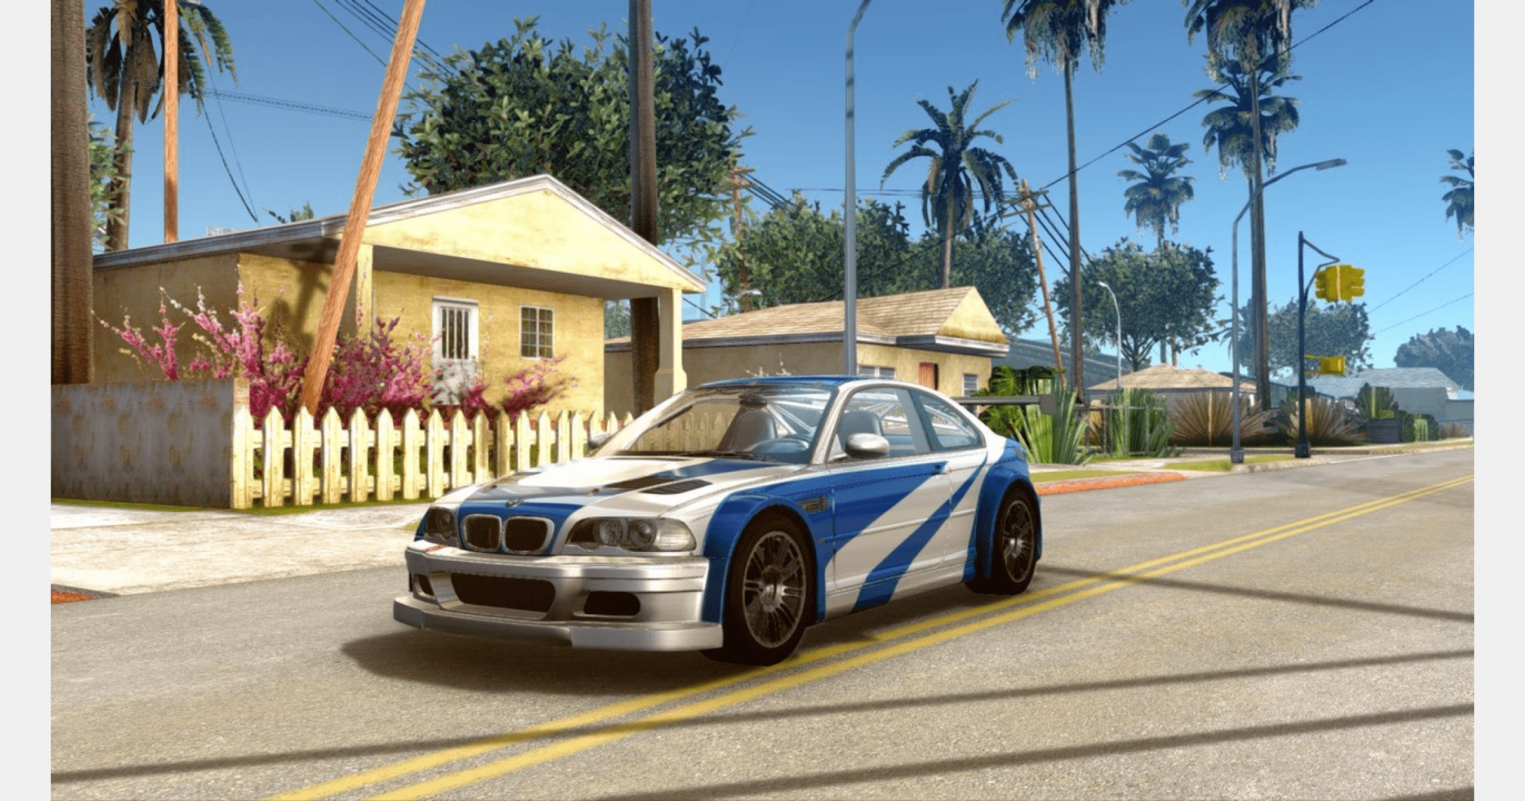 Скриншот из игры «Grand Theft Auto: San Andreas» / 2004 год.